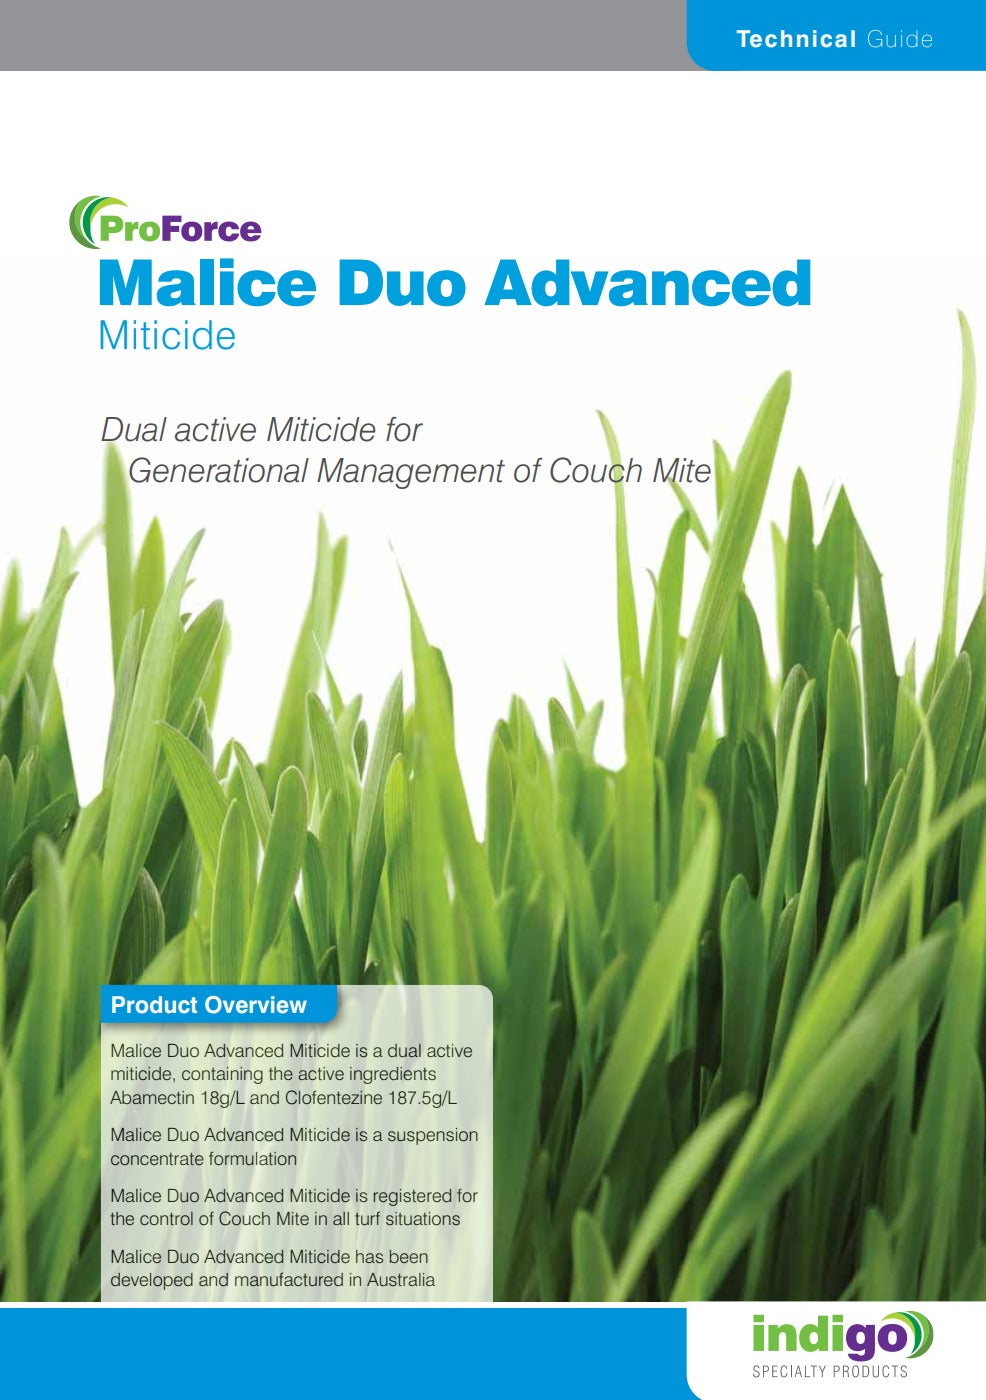 ProForce Malice Duo